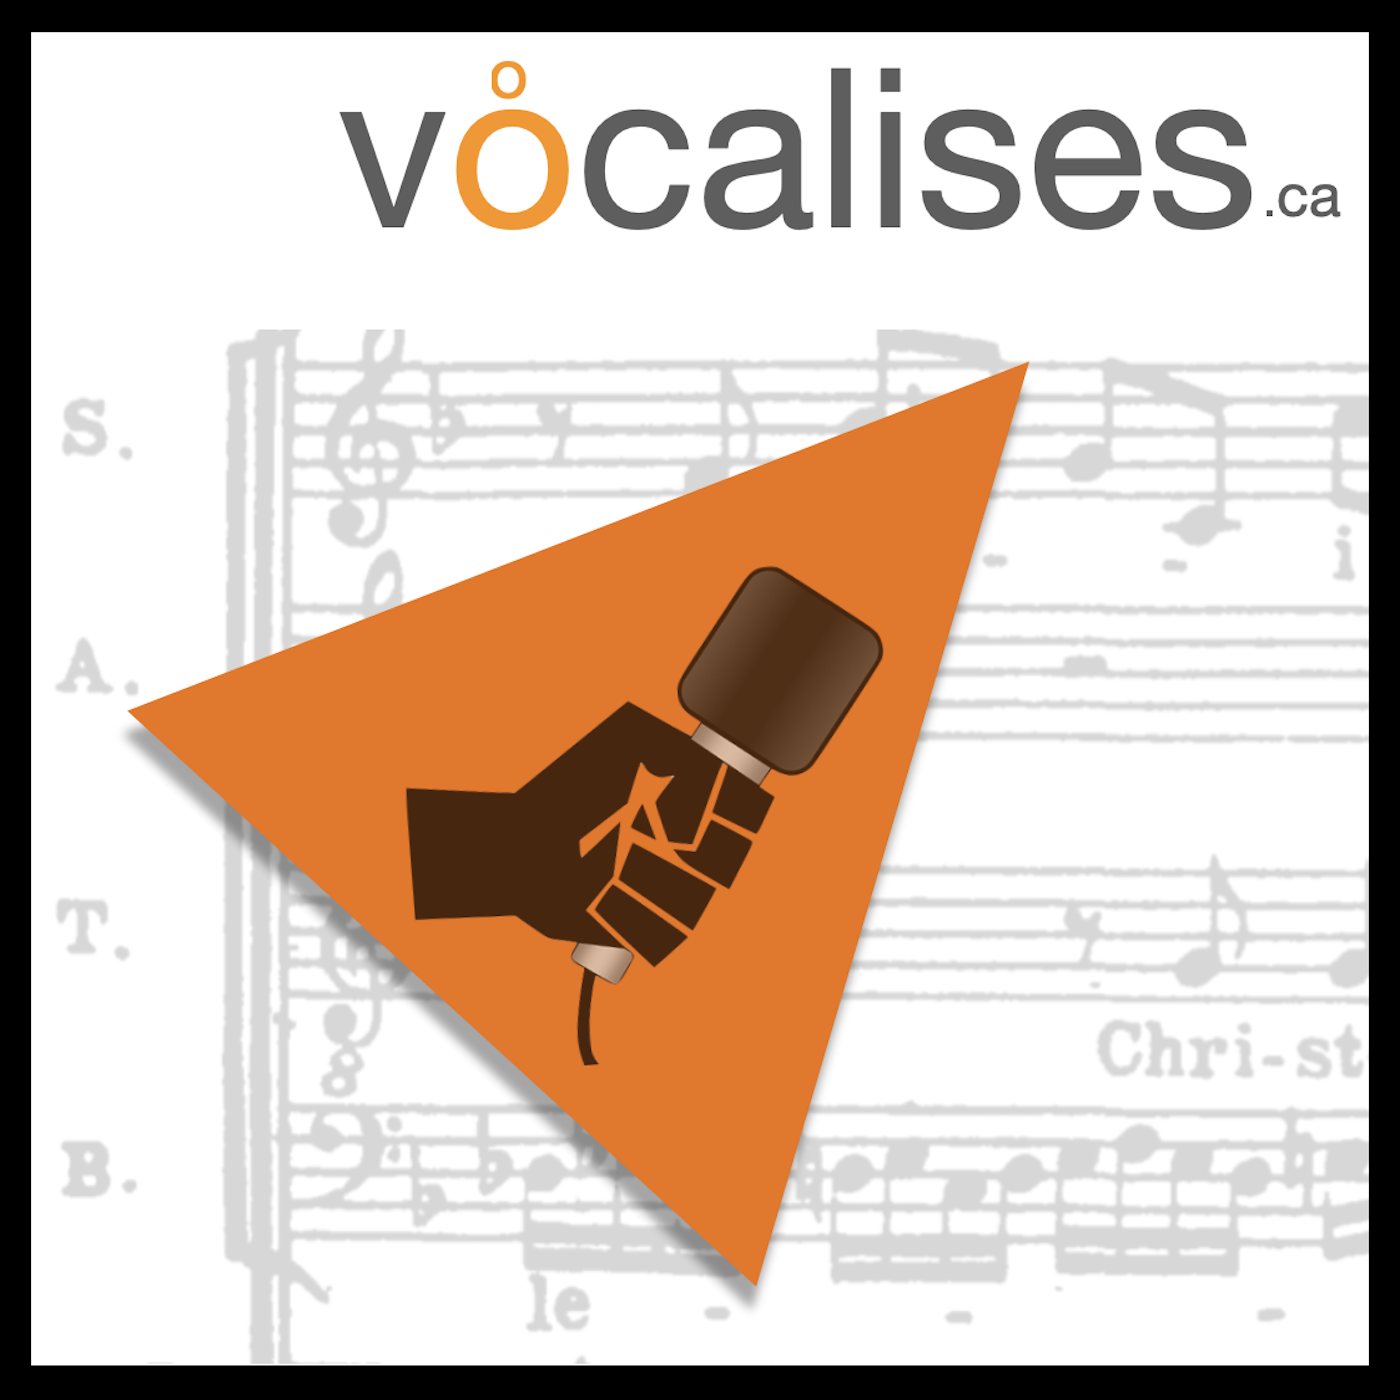 VOCALISES.ca